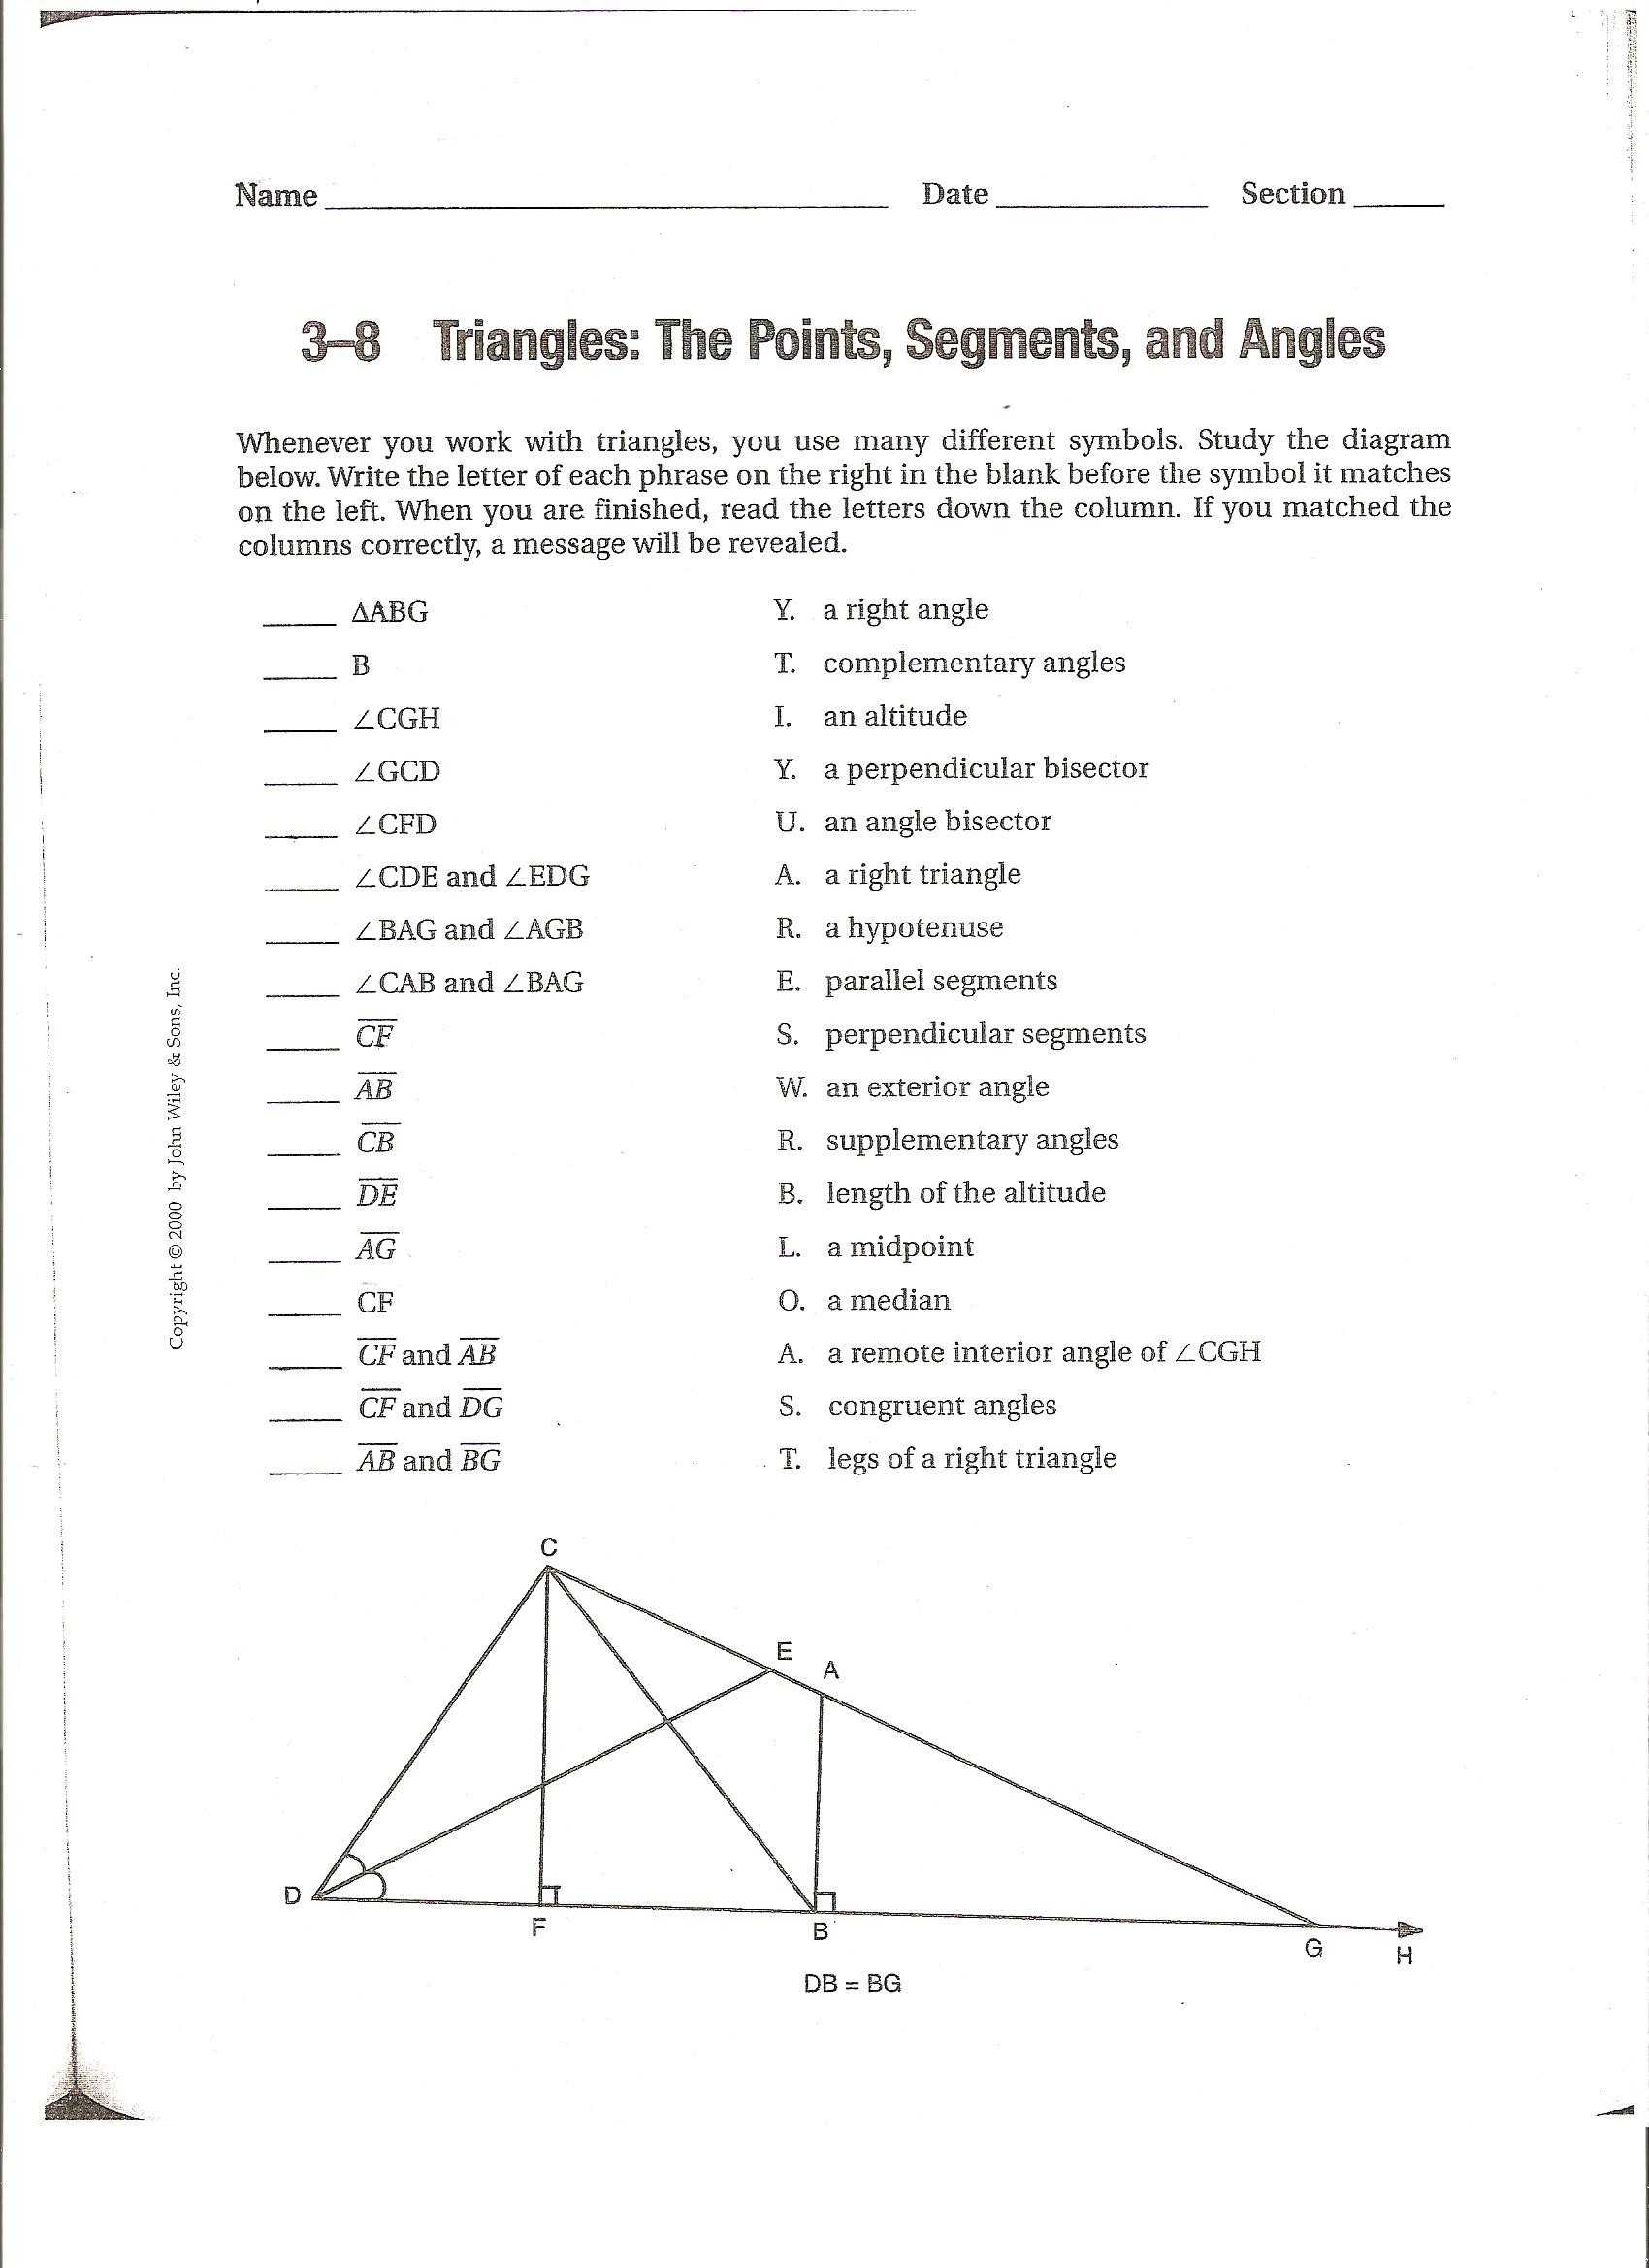 Trigonometry Finding Angles Worksheet Answers Along with Special Right Triangles Worksheet Answers Fresh Trigonometry